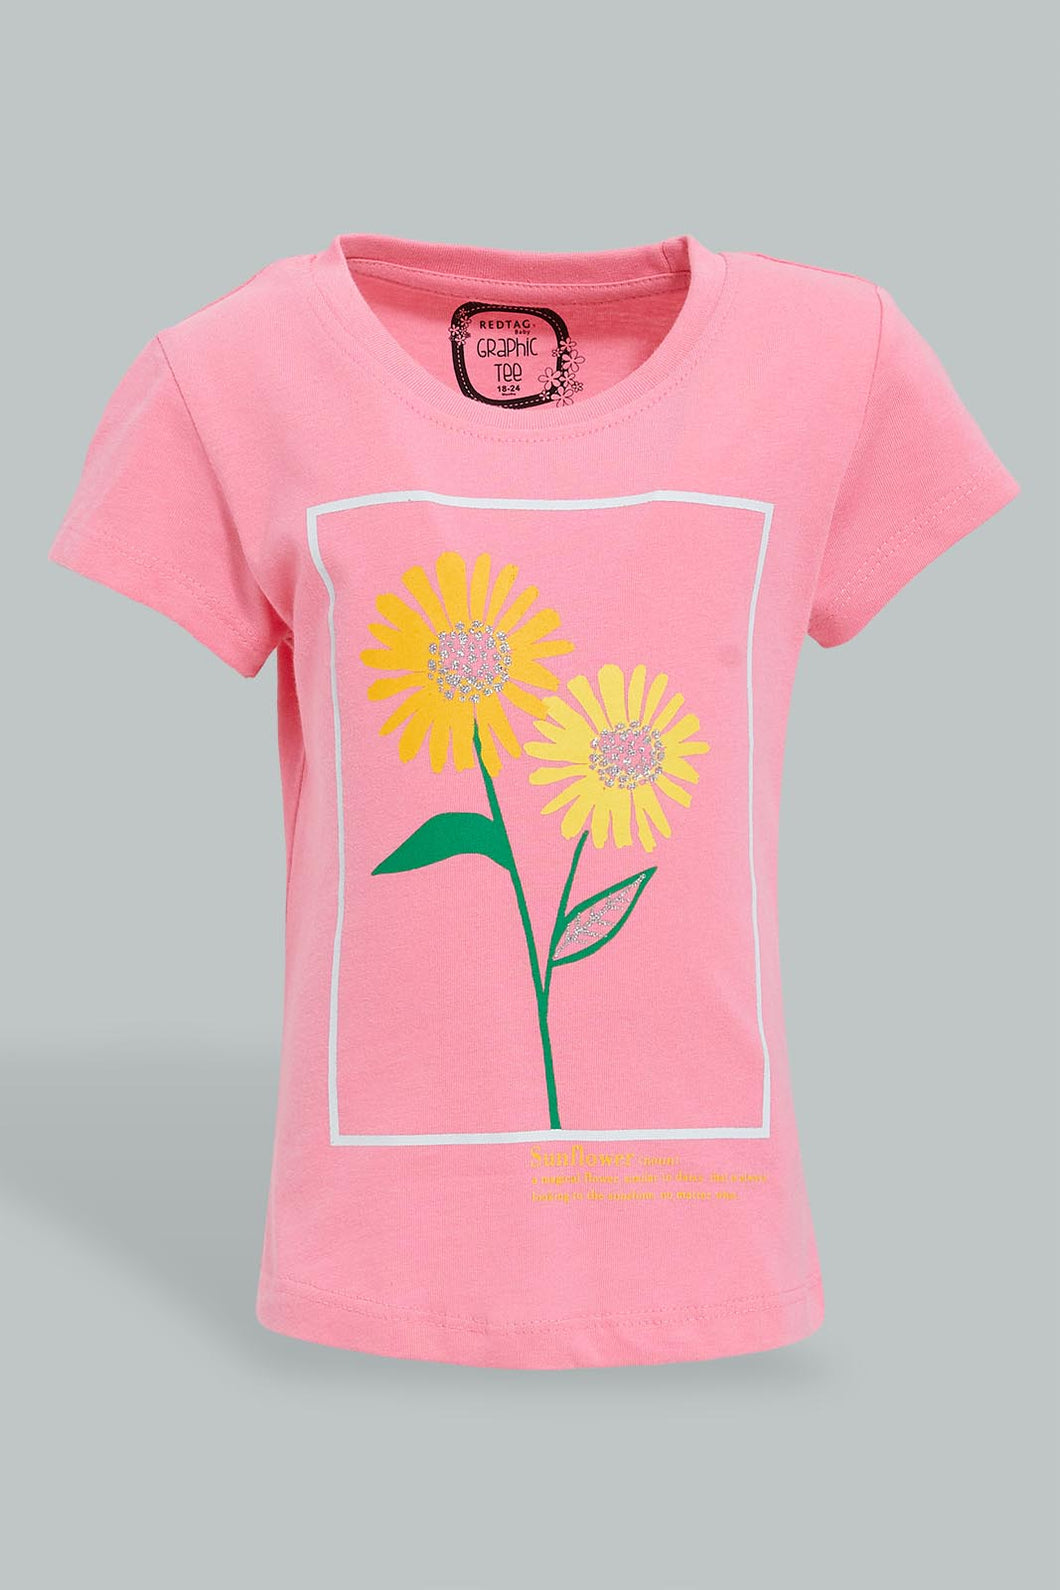 Pink Graphic T-Shirt For Baby Girls تيشيرت مطبوع باللون الوردي للبنات الرضع